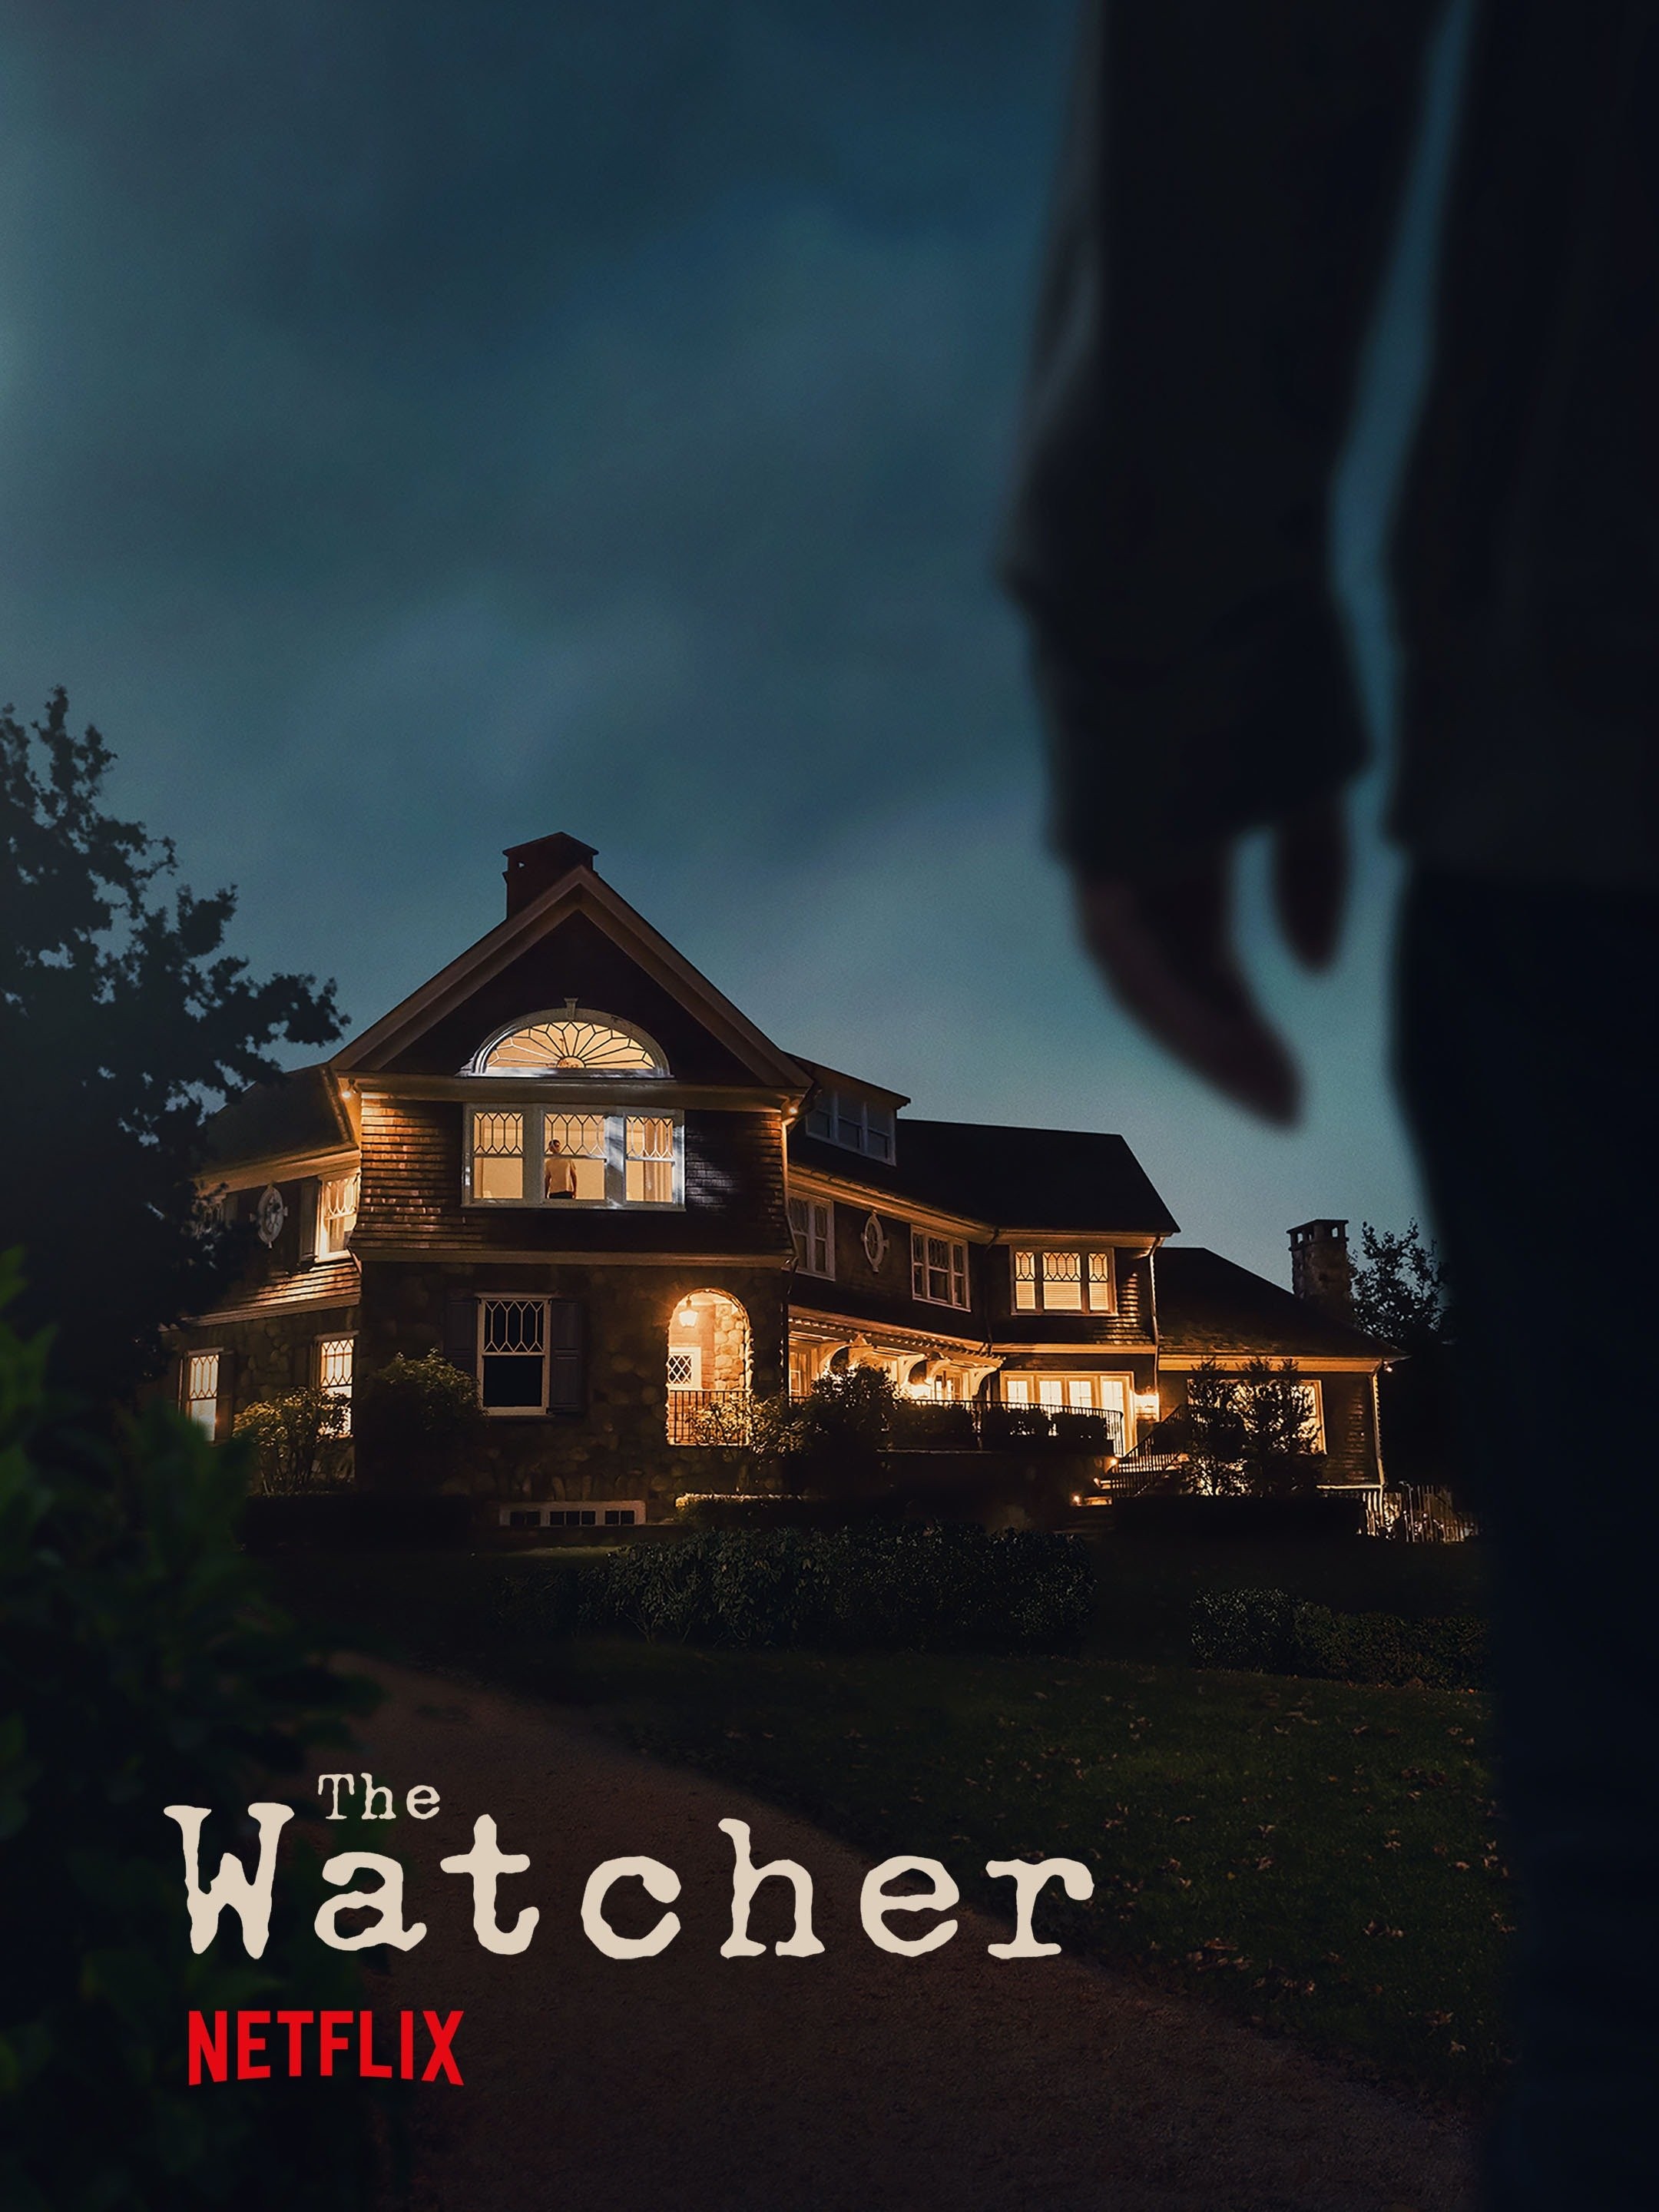 How The Watcher Has Already Set Up Season 2